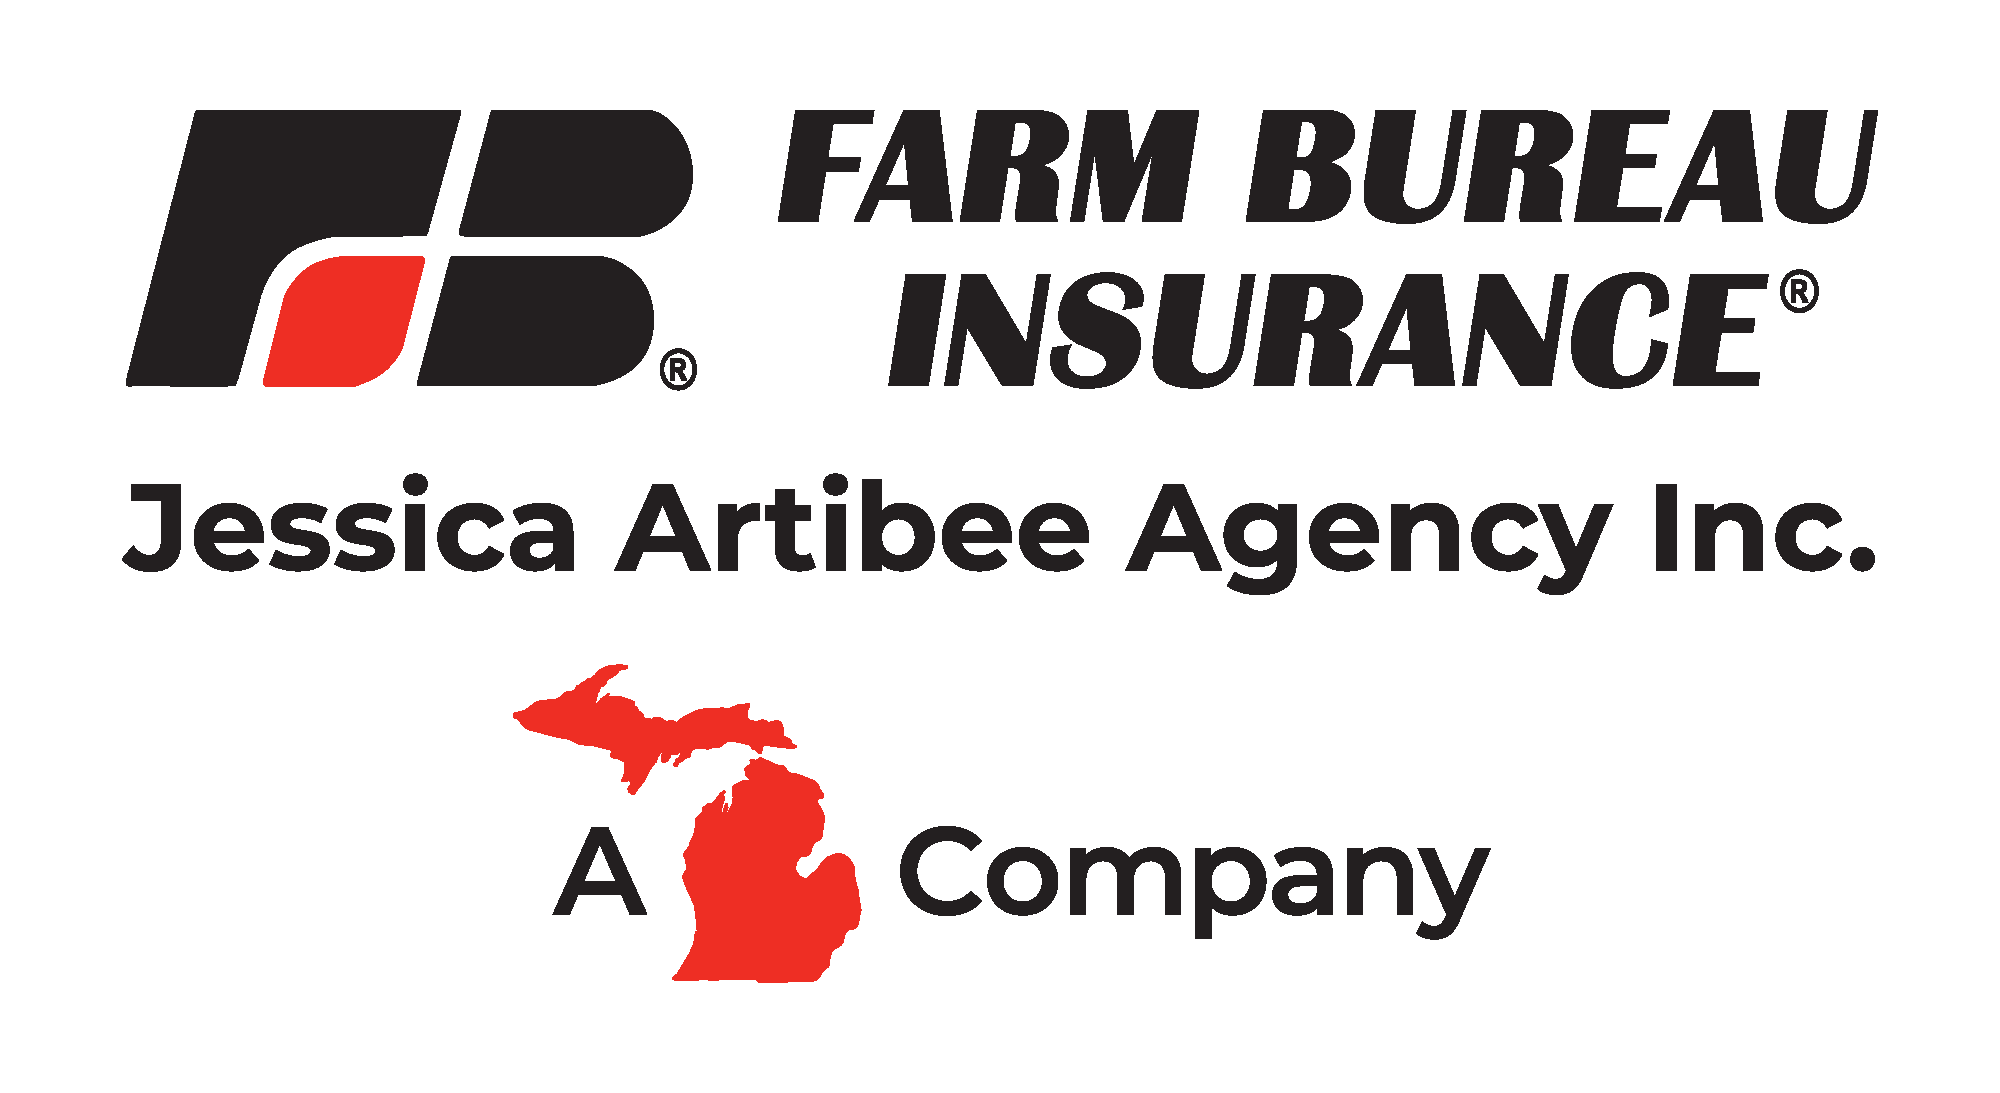 Jessica Artibee Agency, Inc. – Farm Bureau Insurance